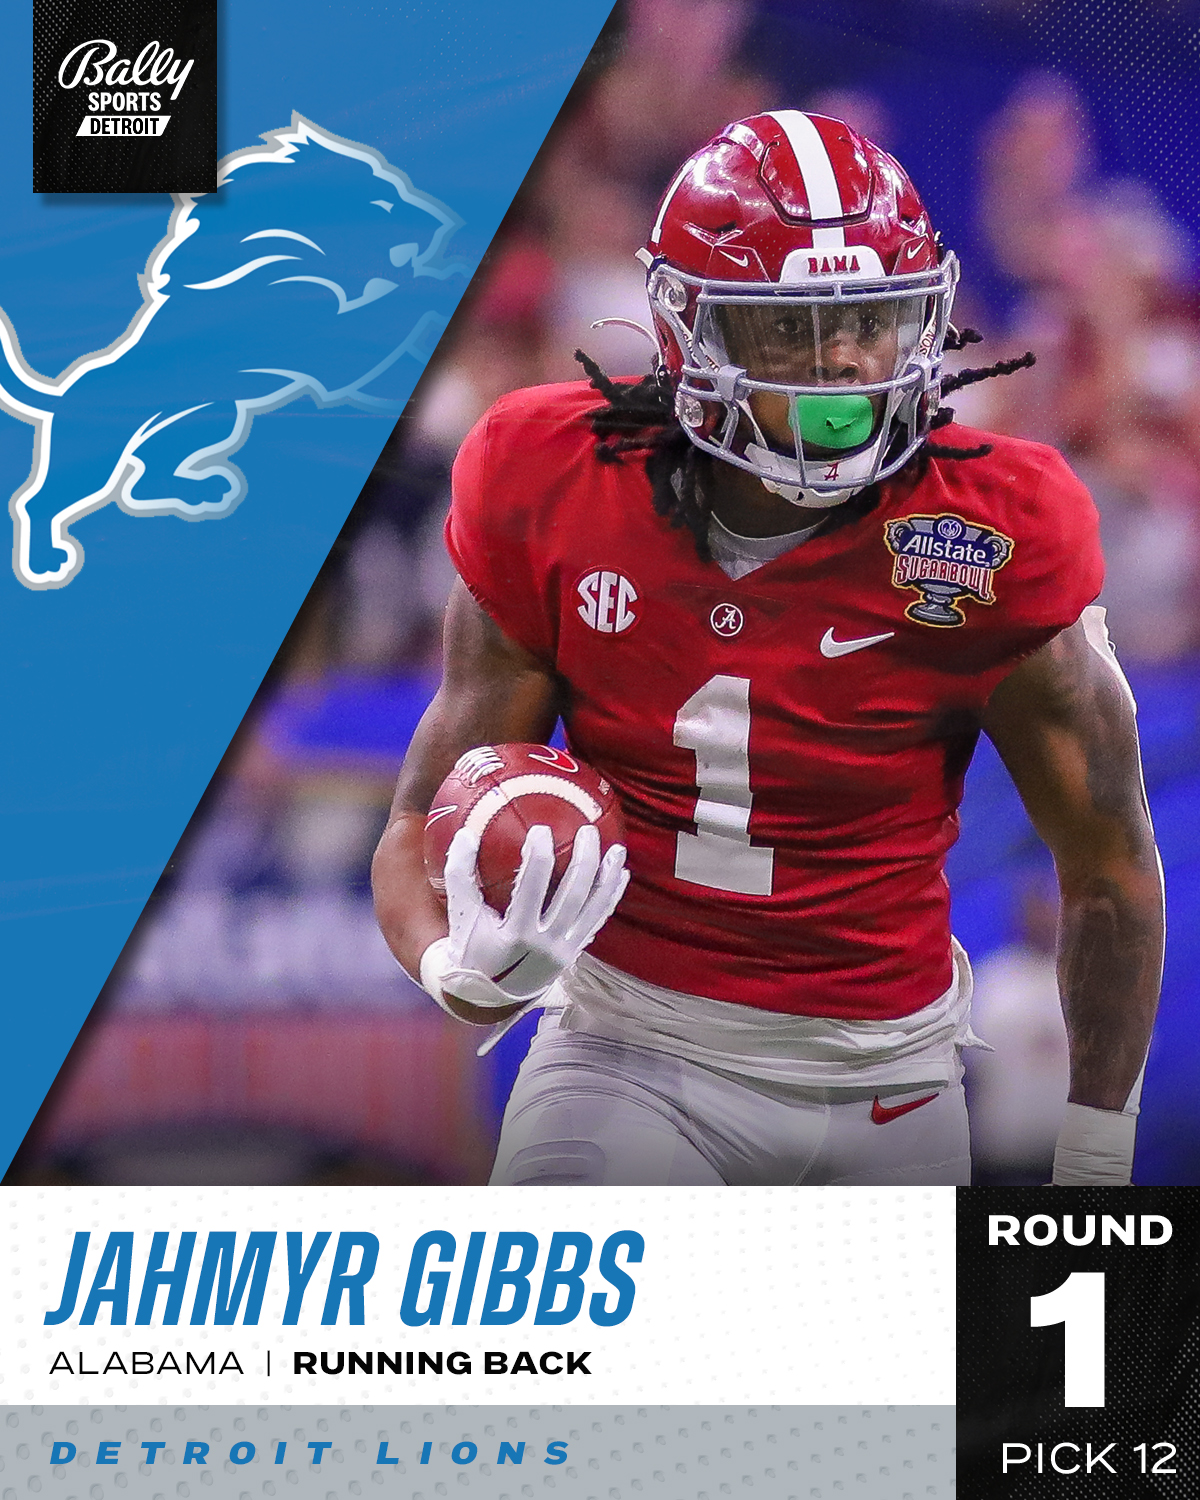 Detroit Lions pick Alabama RB Jahmyr Gibbs at No. 12 in NFL draft